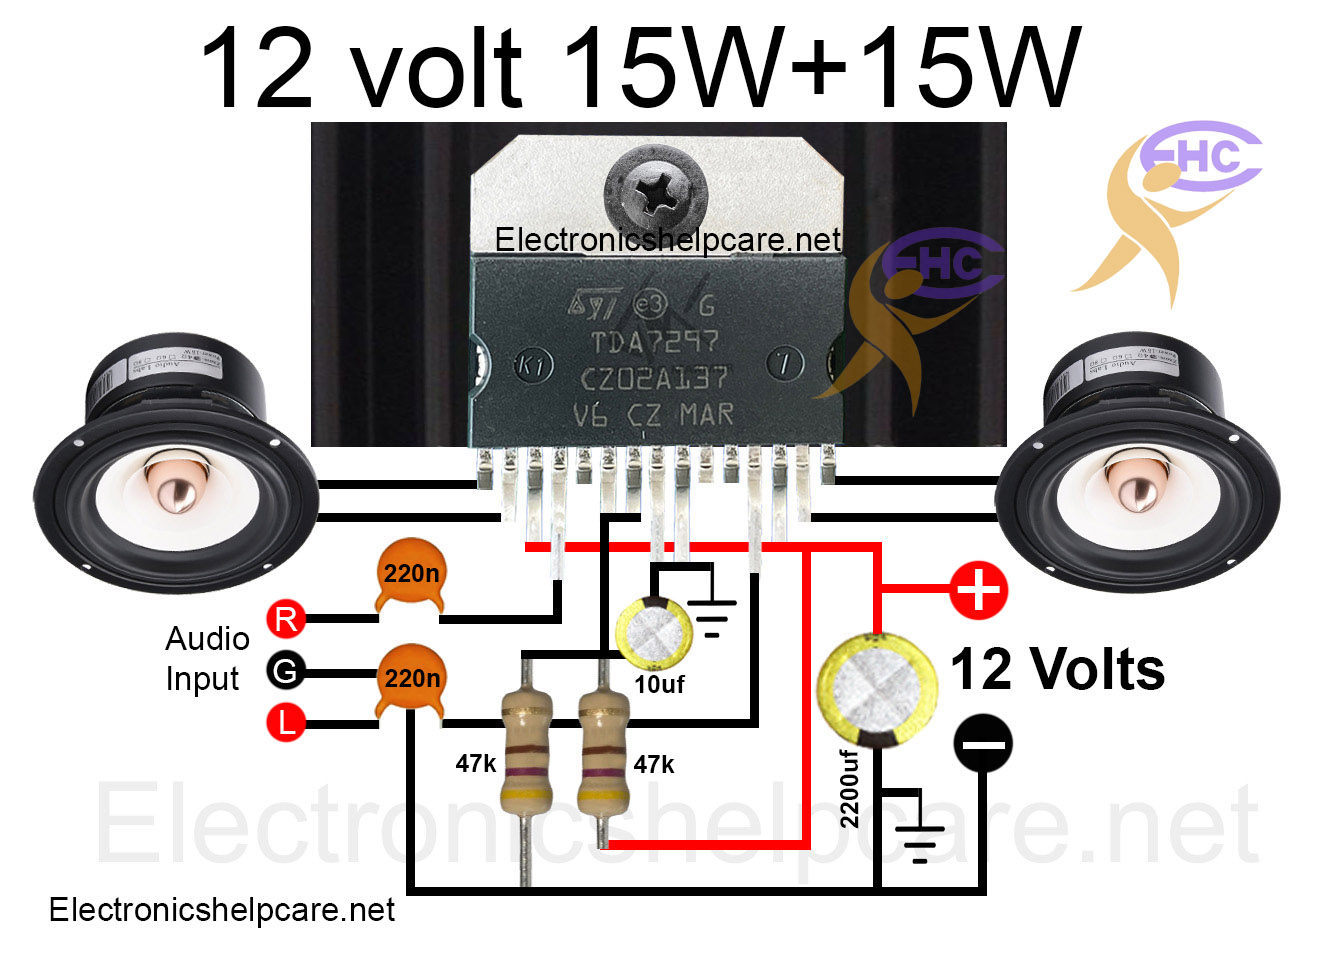 Amplifier circuit diagram using TDA7297